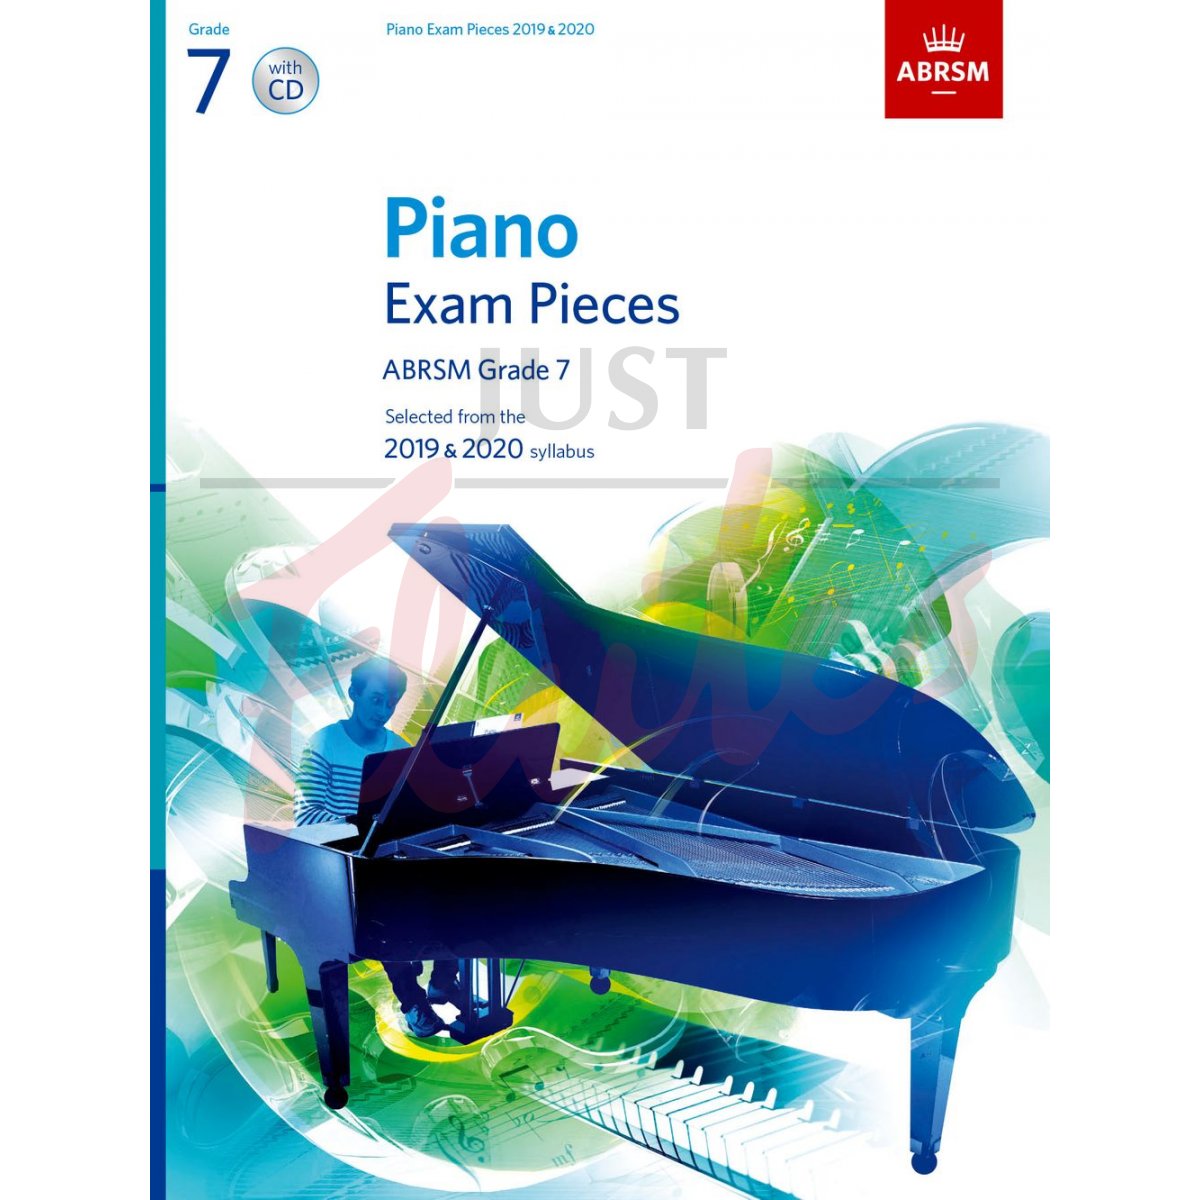 Piano Exam Pieces 2019-2020, Grade 7